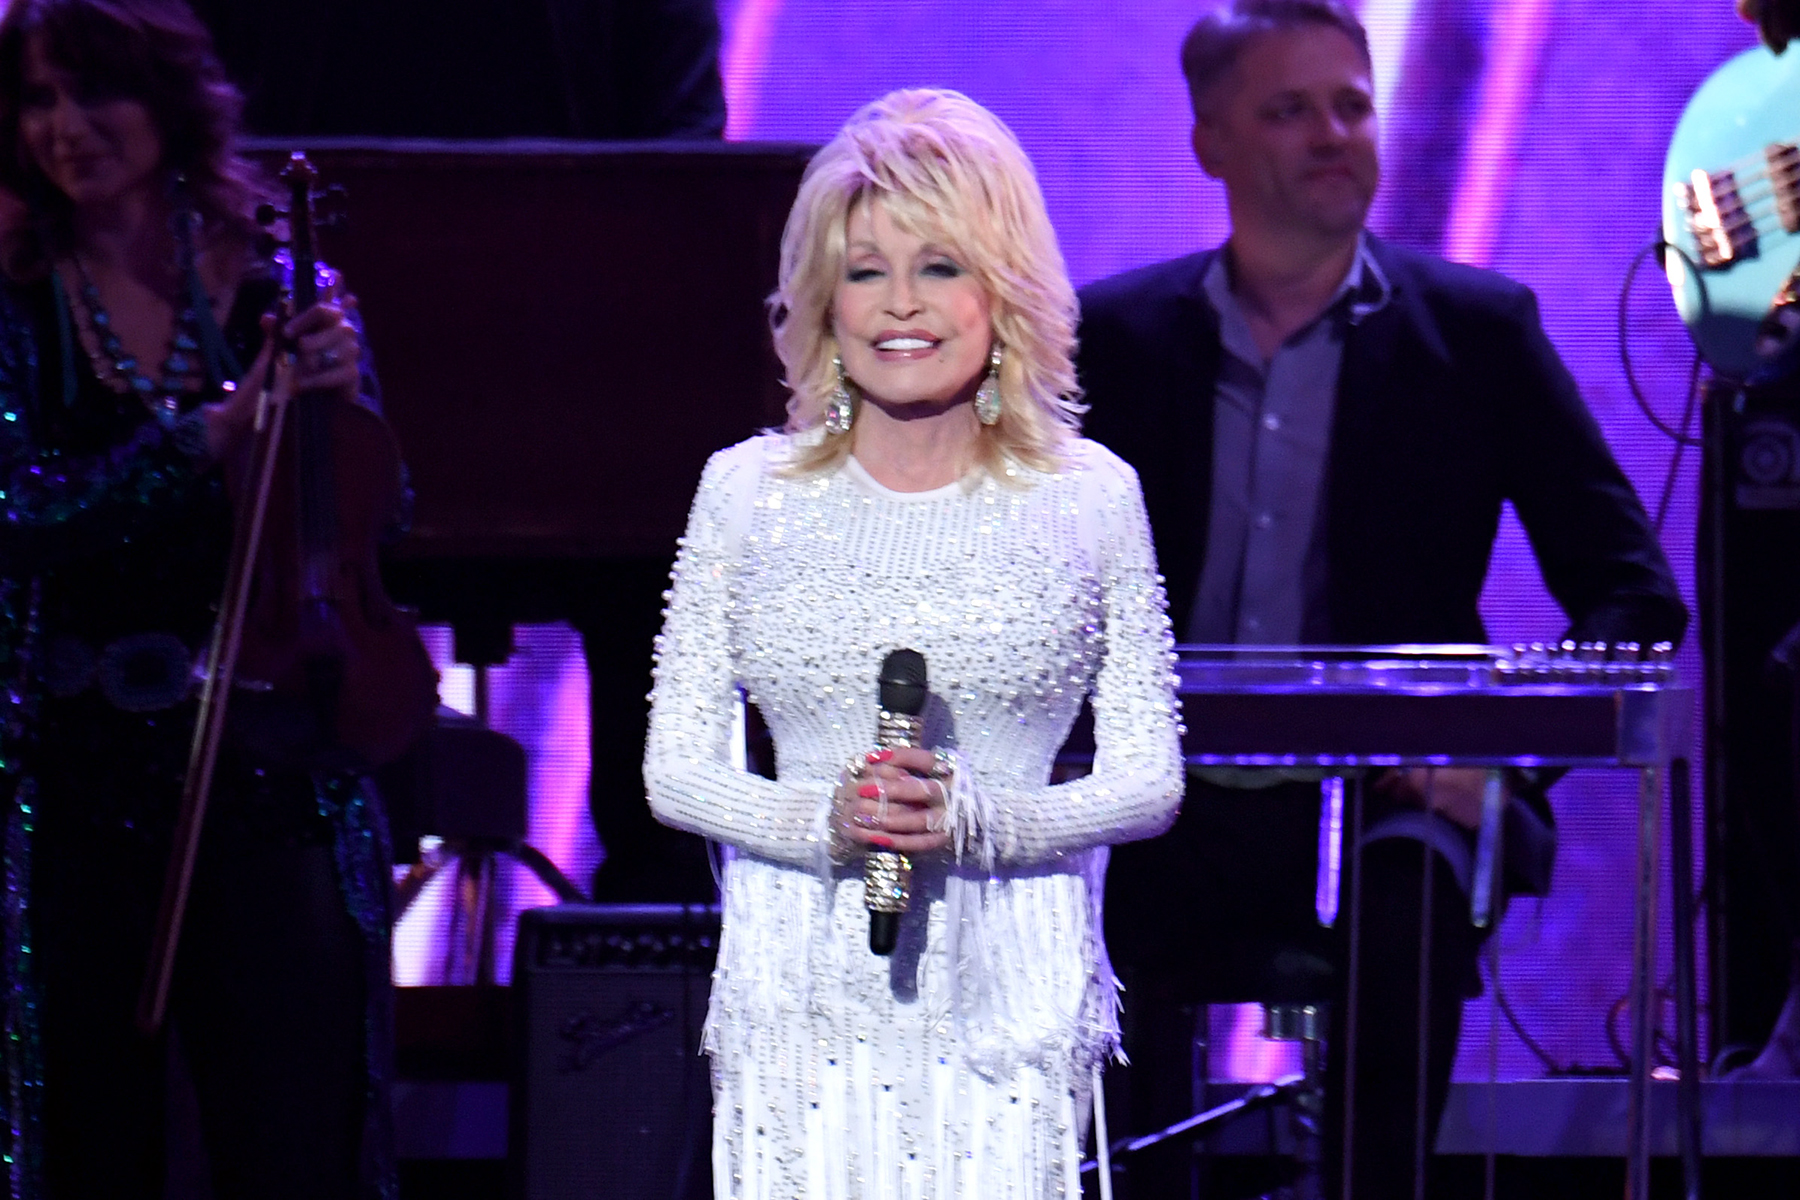 Dolly Parton Tells Fans to Keep the Faith During Coronavirus Pandemic